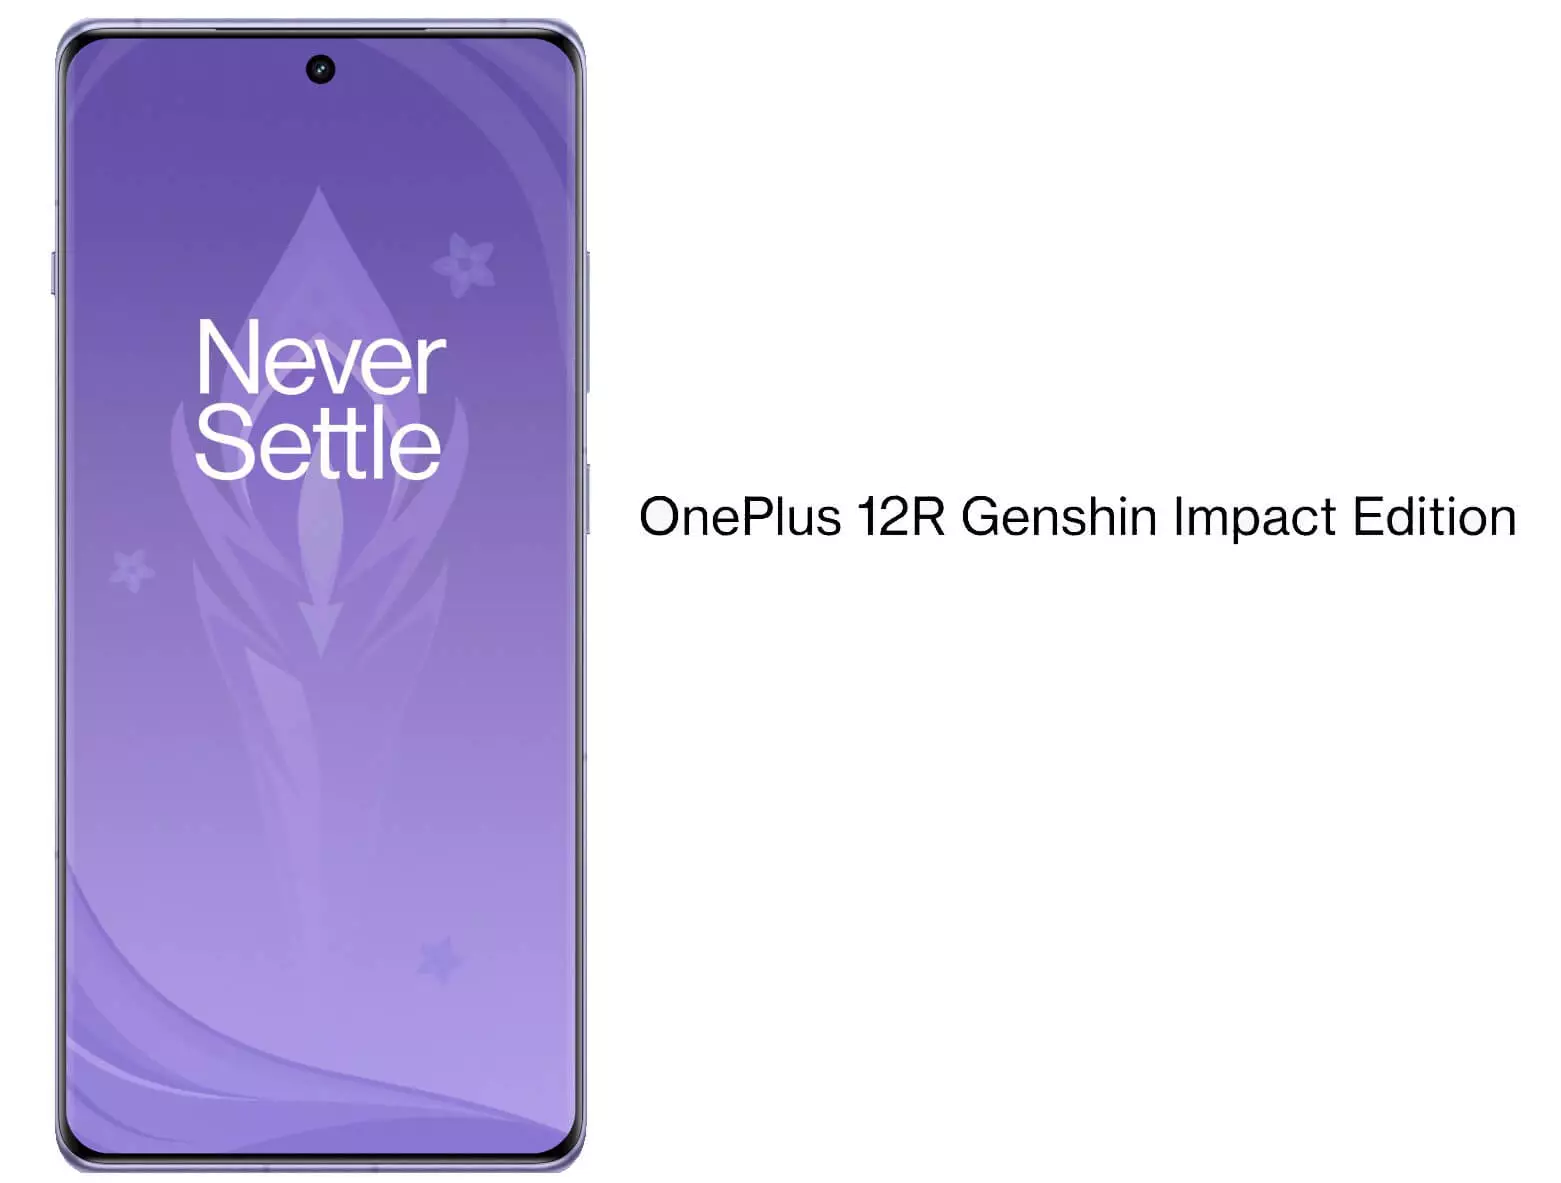 OnePlus 12R Genshin Impact front design teaser.